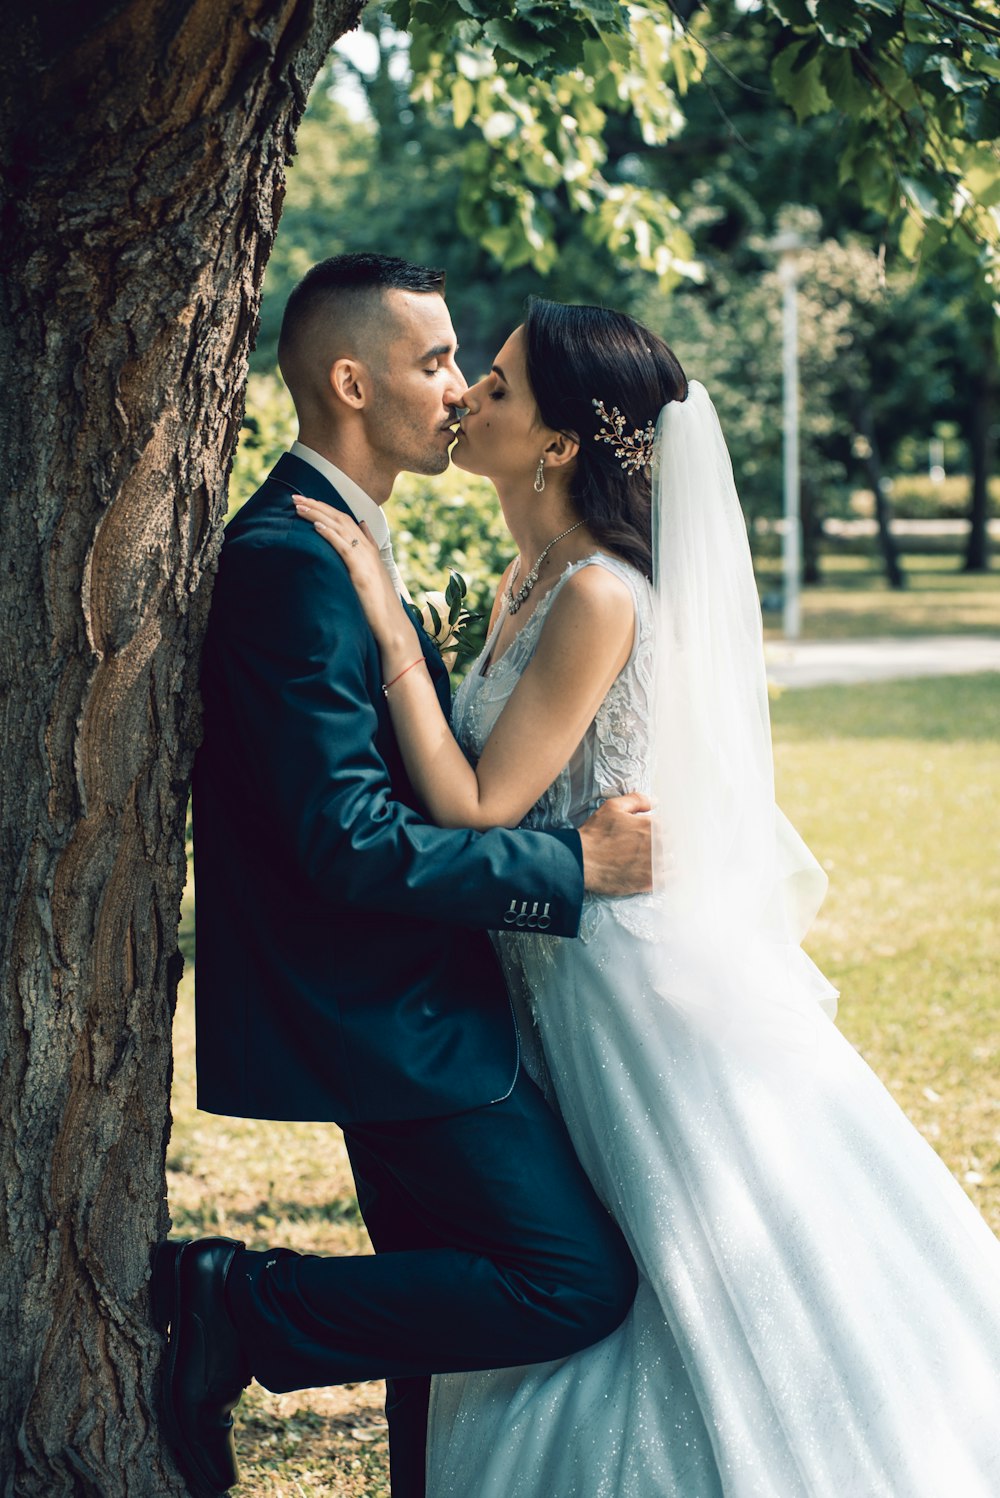 man in black suit kissing woman in white wedding dress near brown tree during daytime